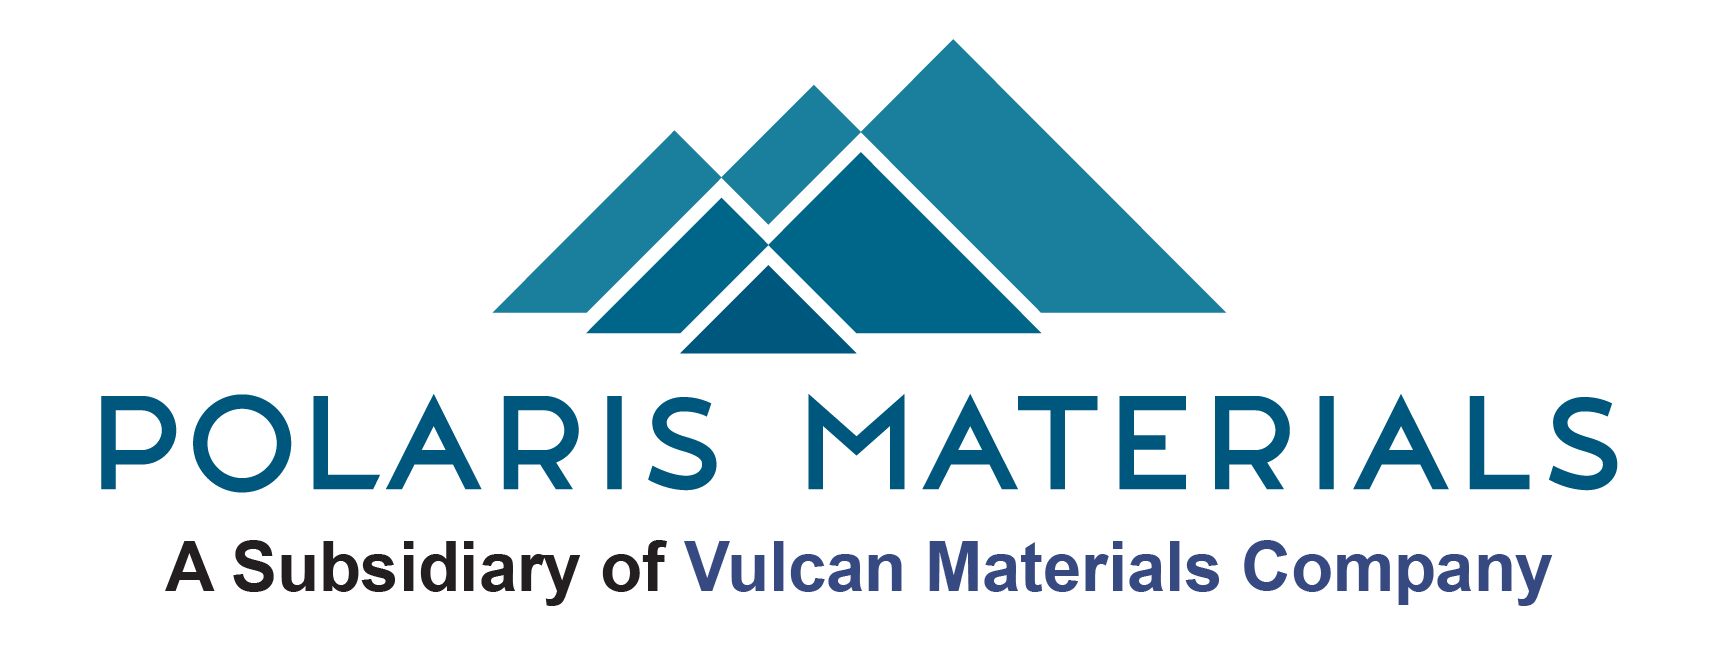 Polar Materials - A Subsidiary of Vulcan Materials Company